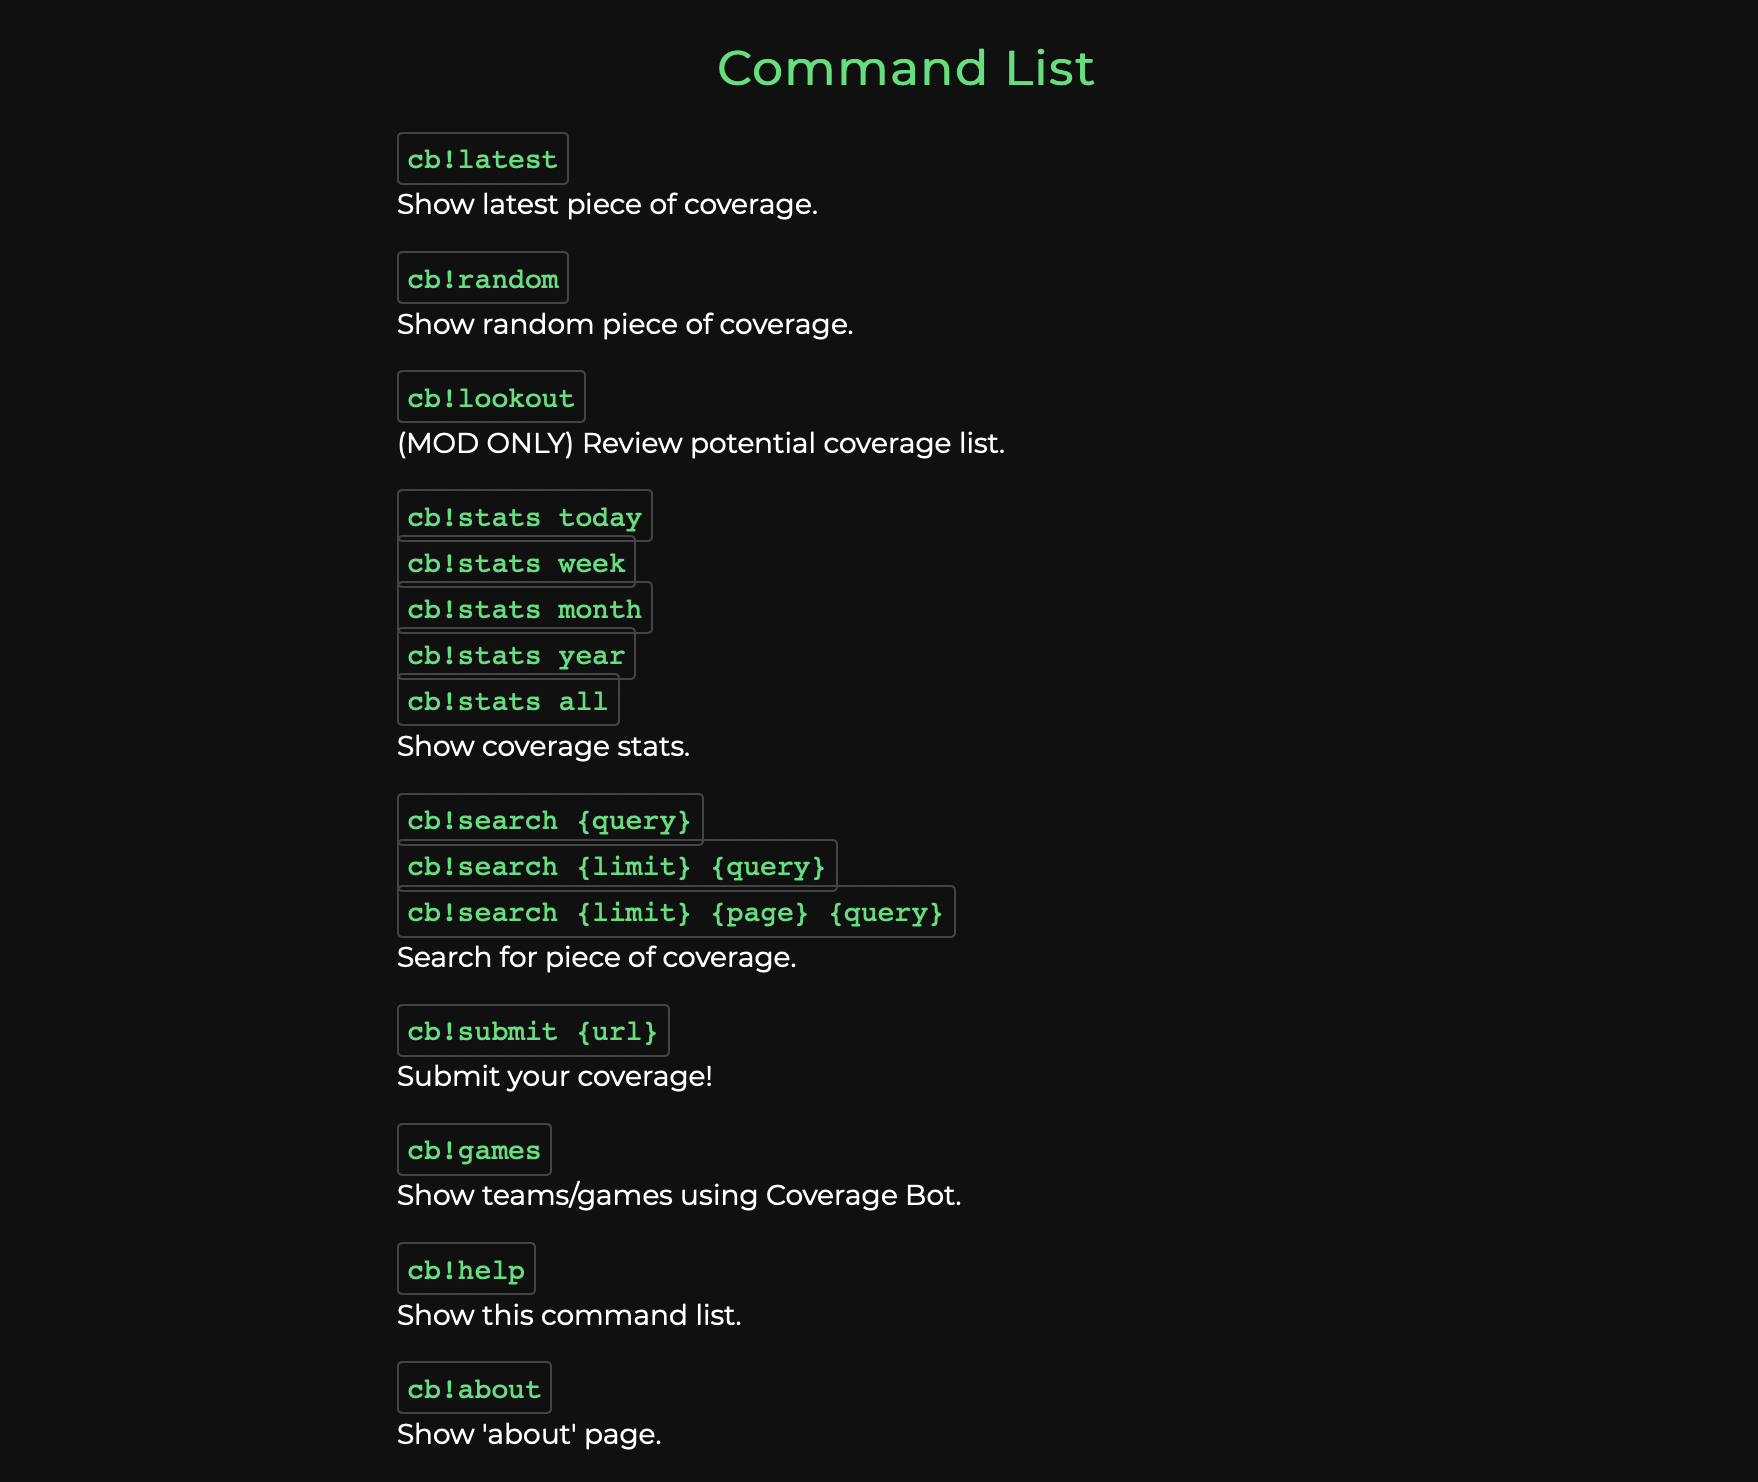 New Command List